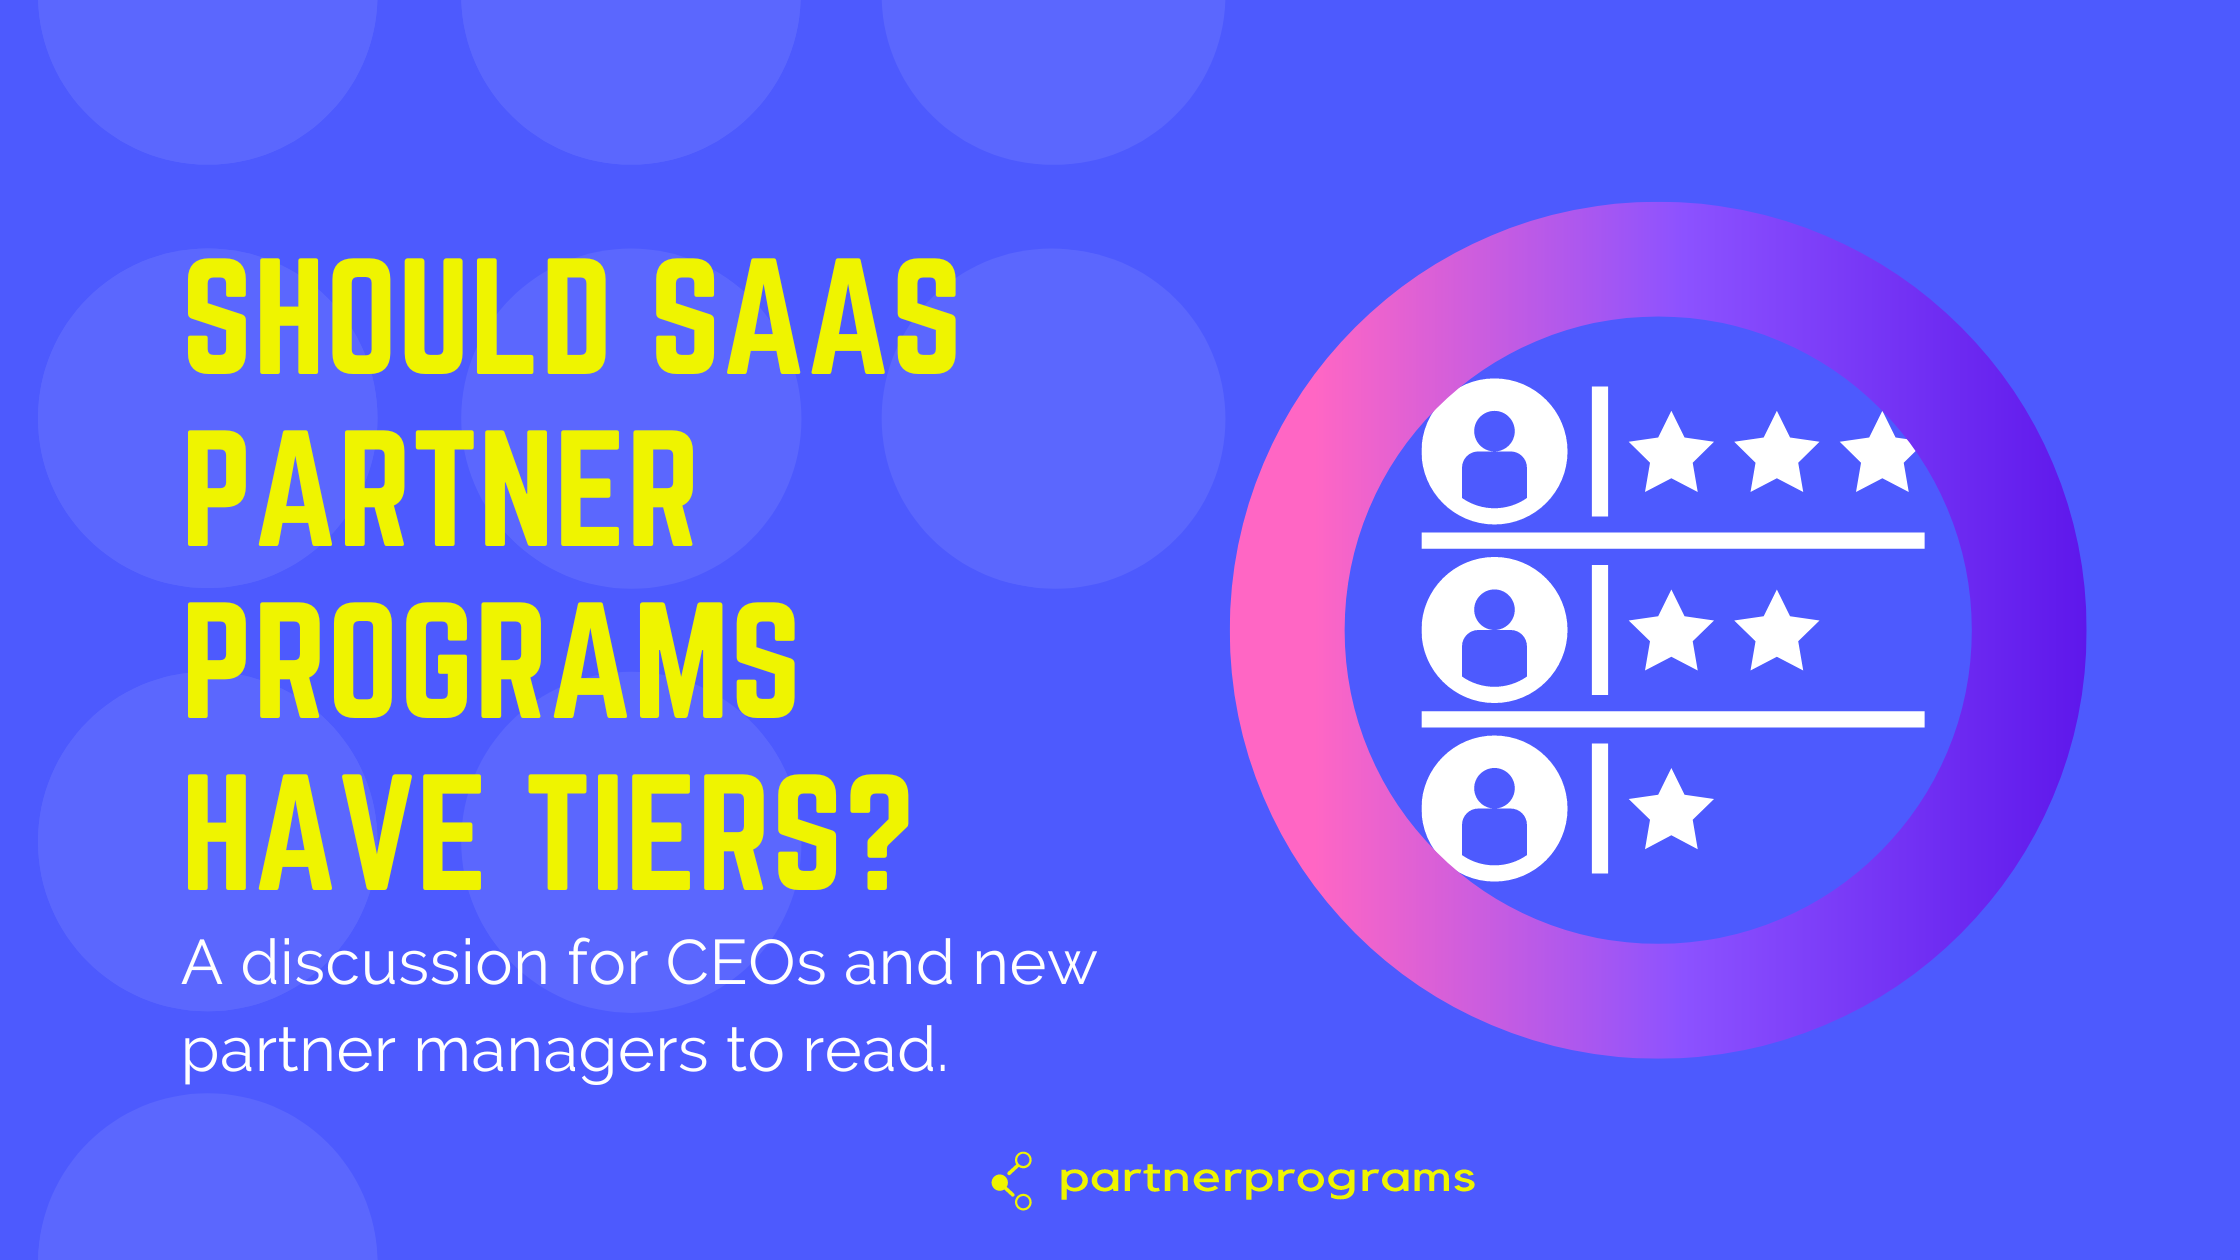 SaaS Partner Programs have Tiers